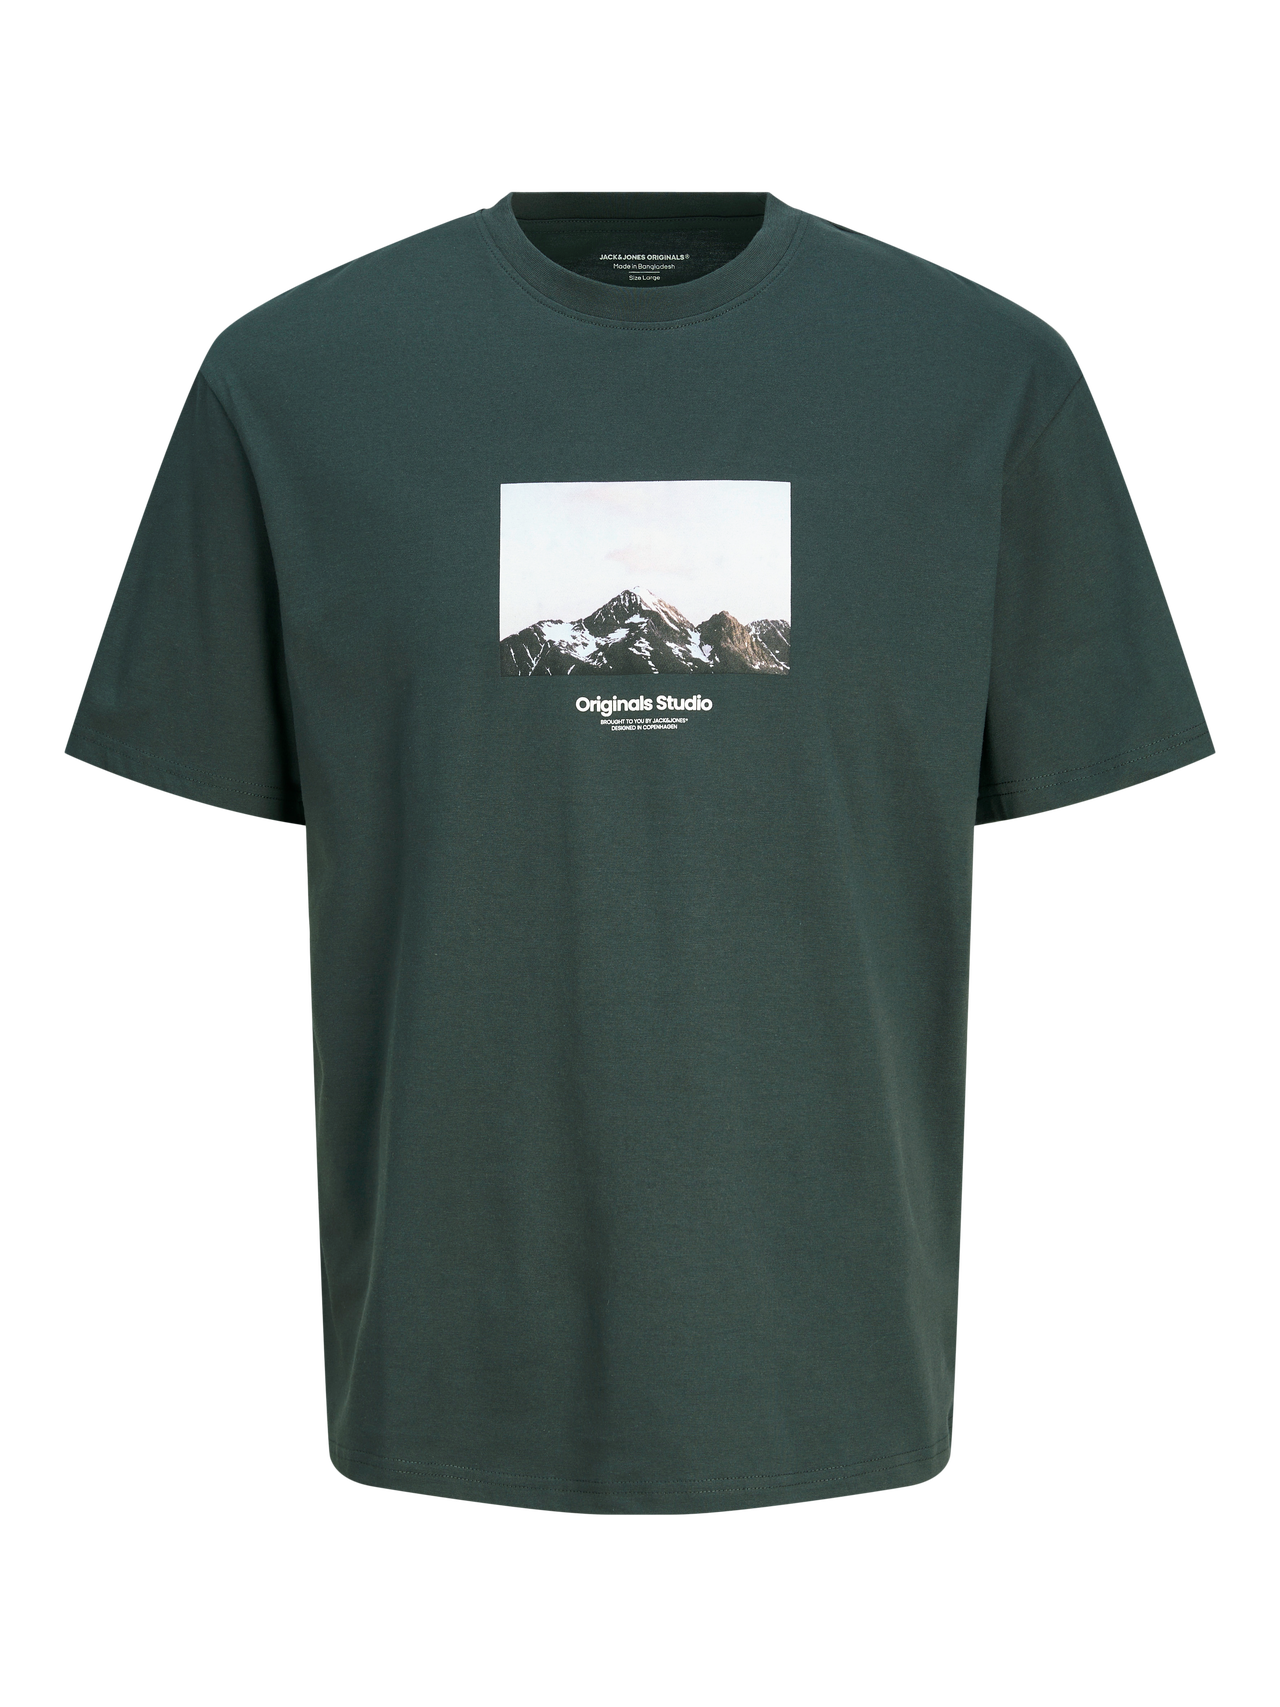 Jack & Jones Gedruckt Rundhals T-shirt -Forest River - 12250421